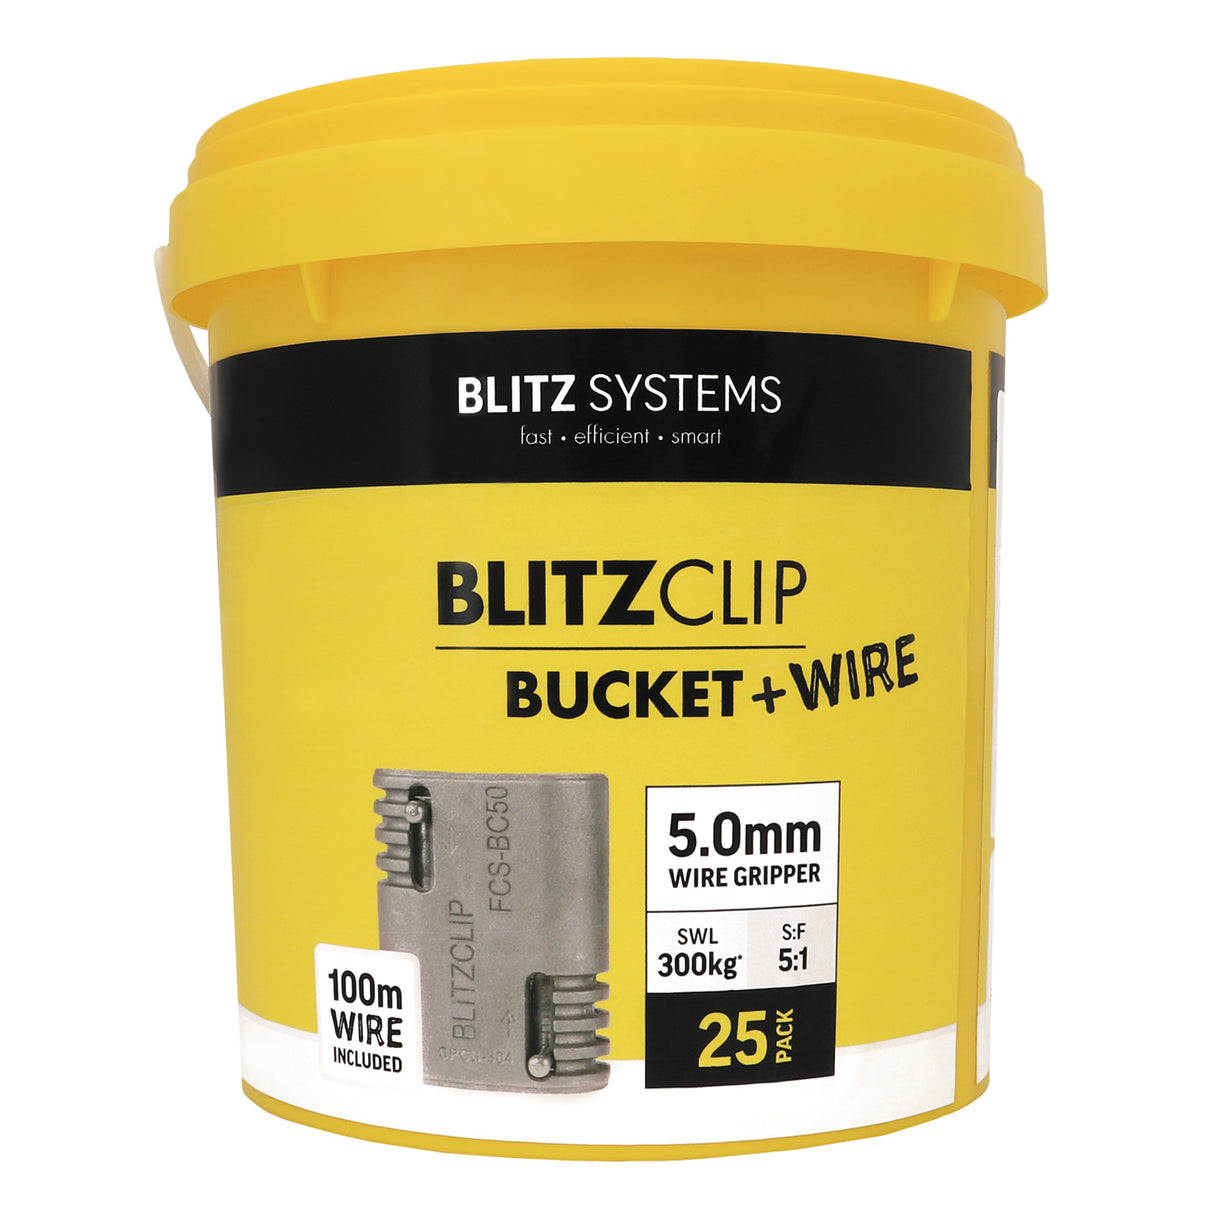 BLITZCLIP Bucket - 5.0mm Wire Gripper x 25 Pcs + Wire 5.0x100M